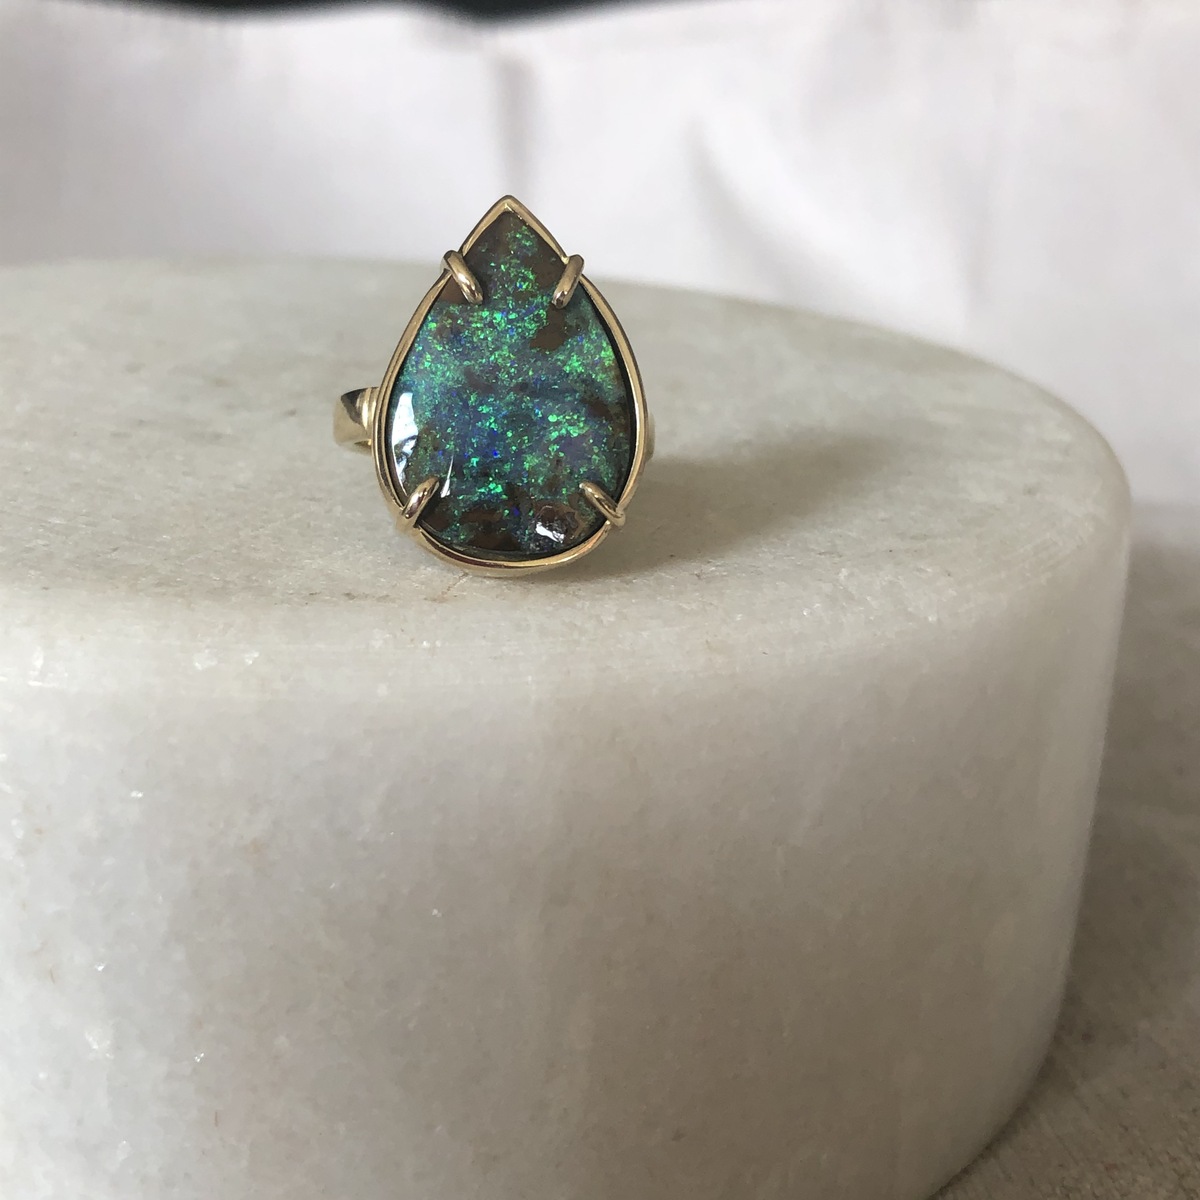 Large tear drop shape boulder opal ring